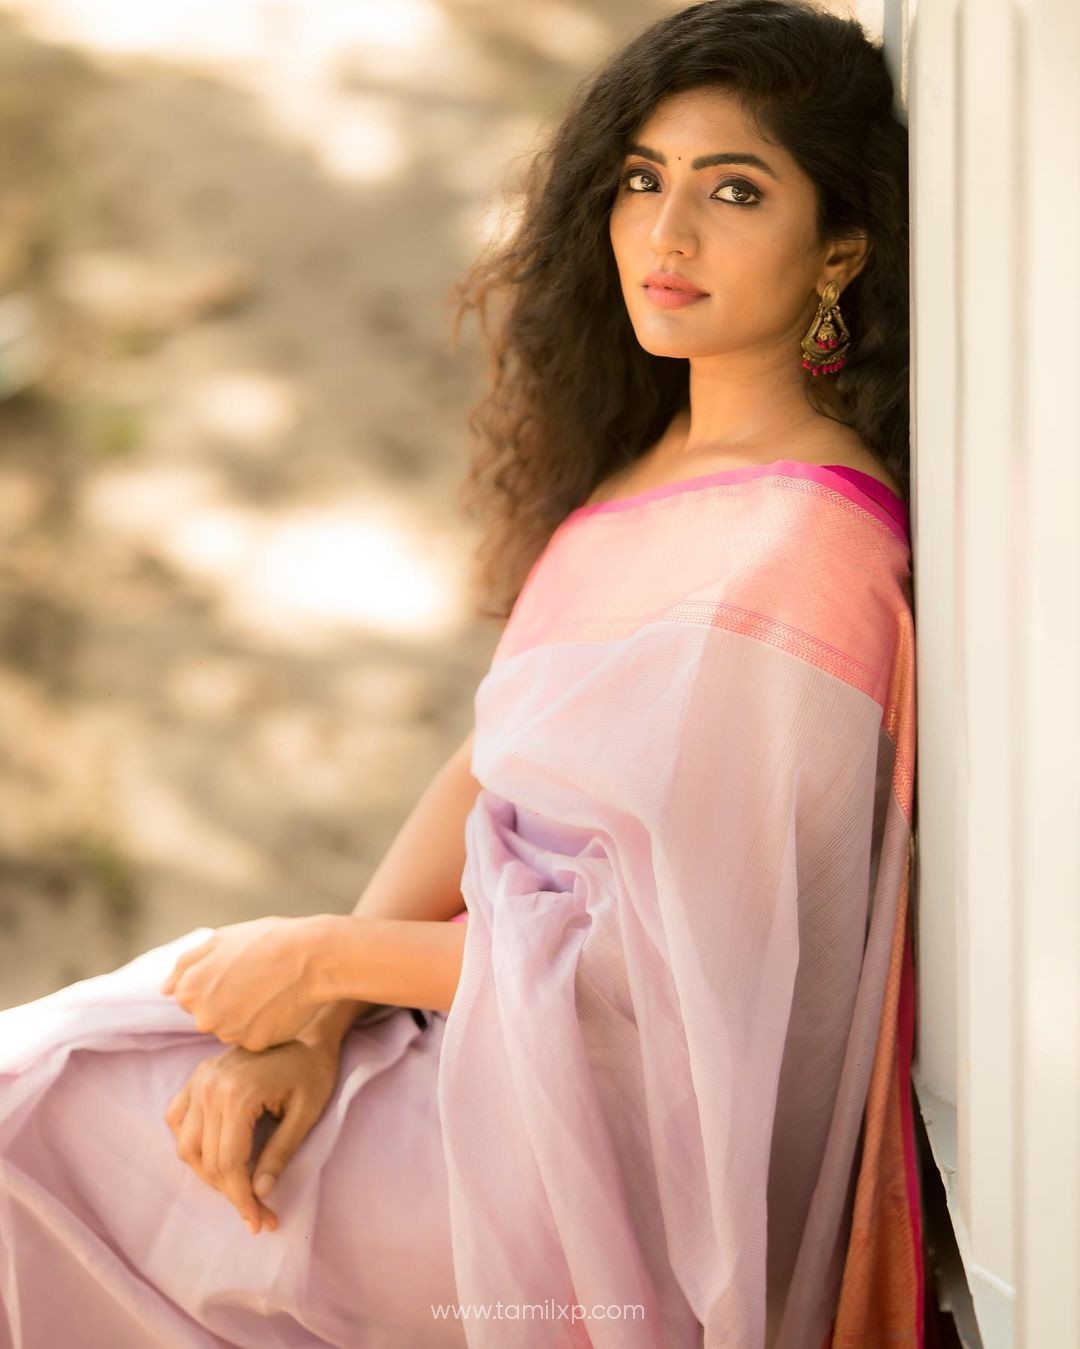 Eesha rebba latest stylish photoshoot in saree